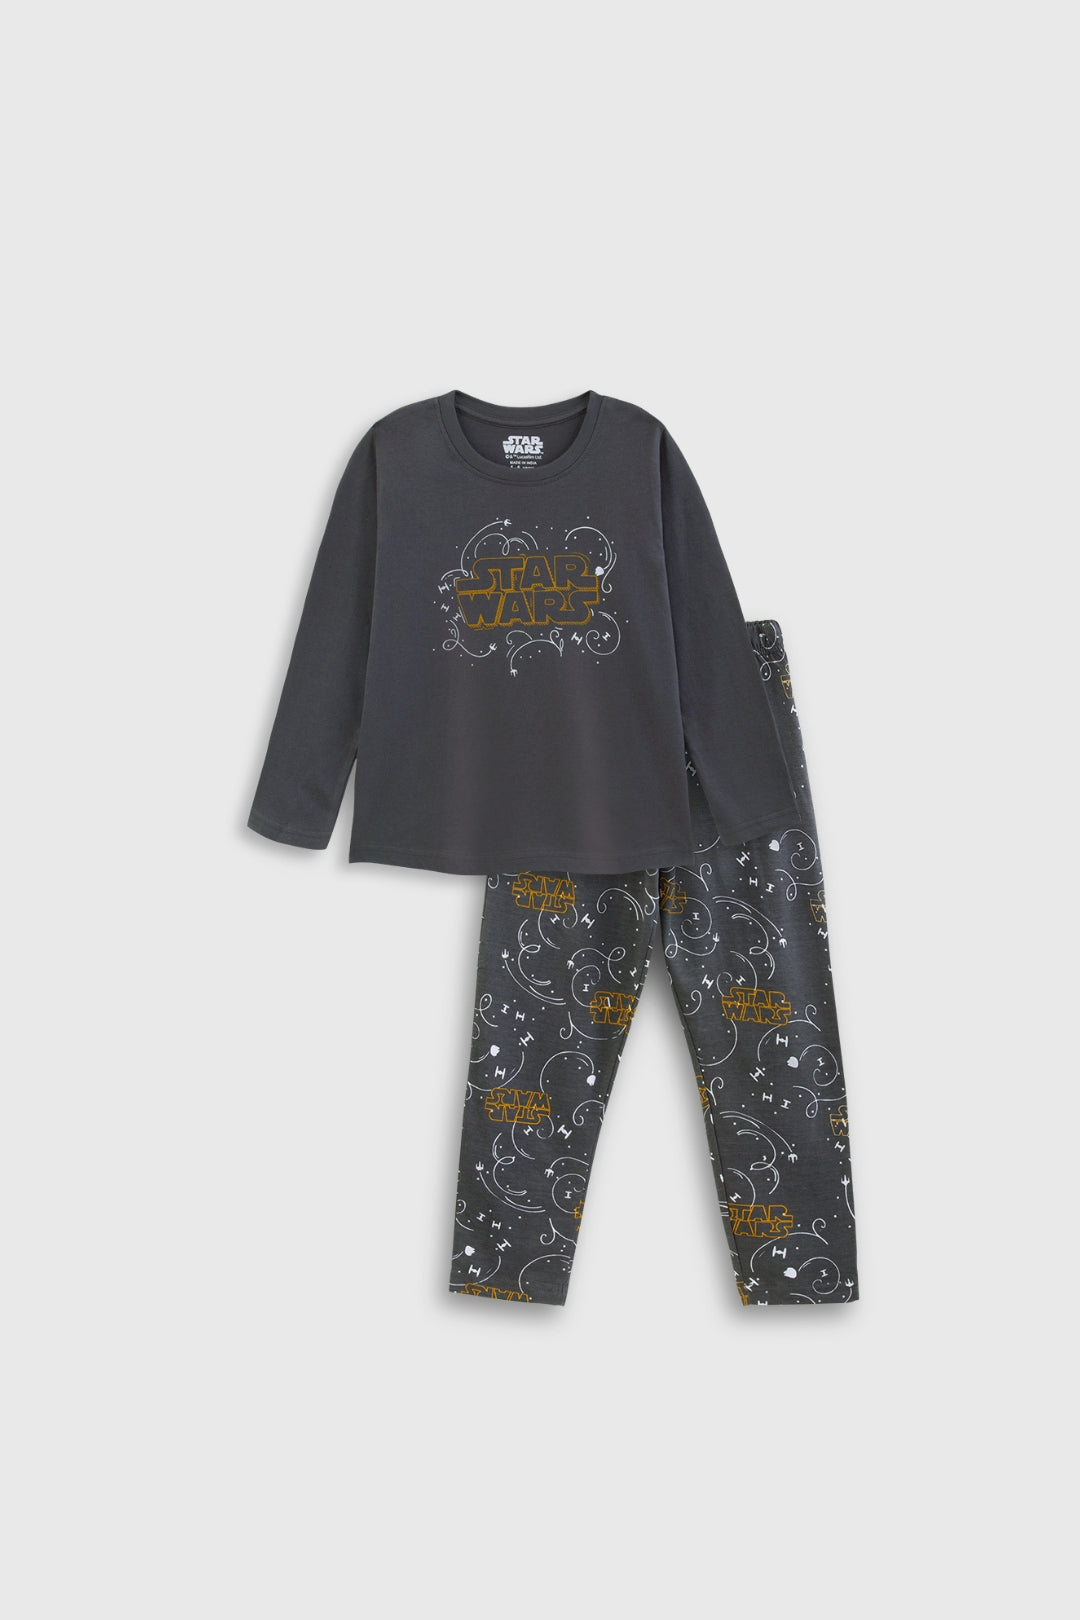 Star Wars Galaxy Pajama set